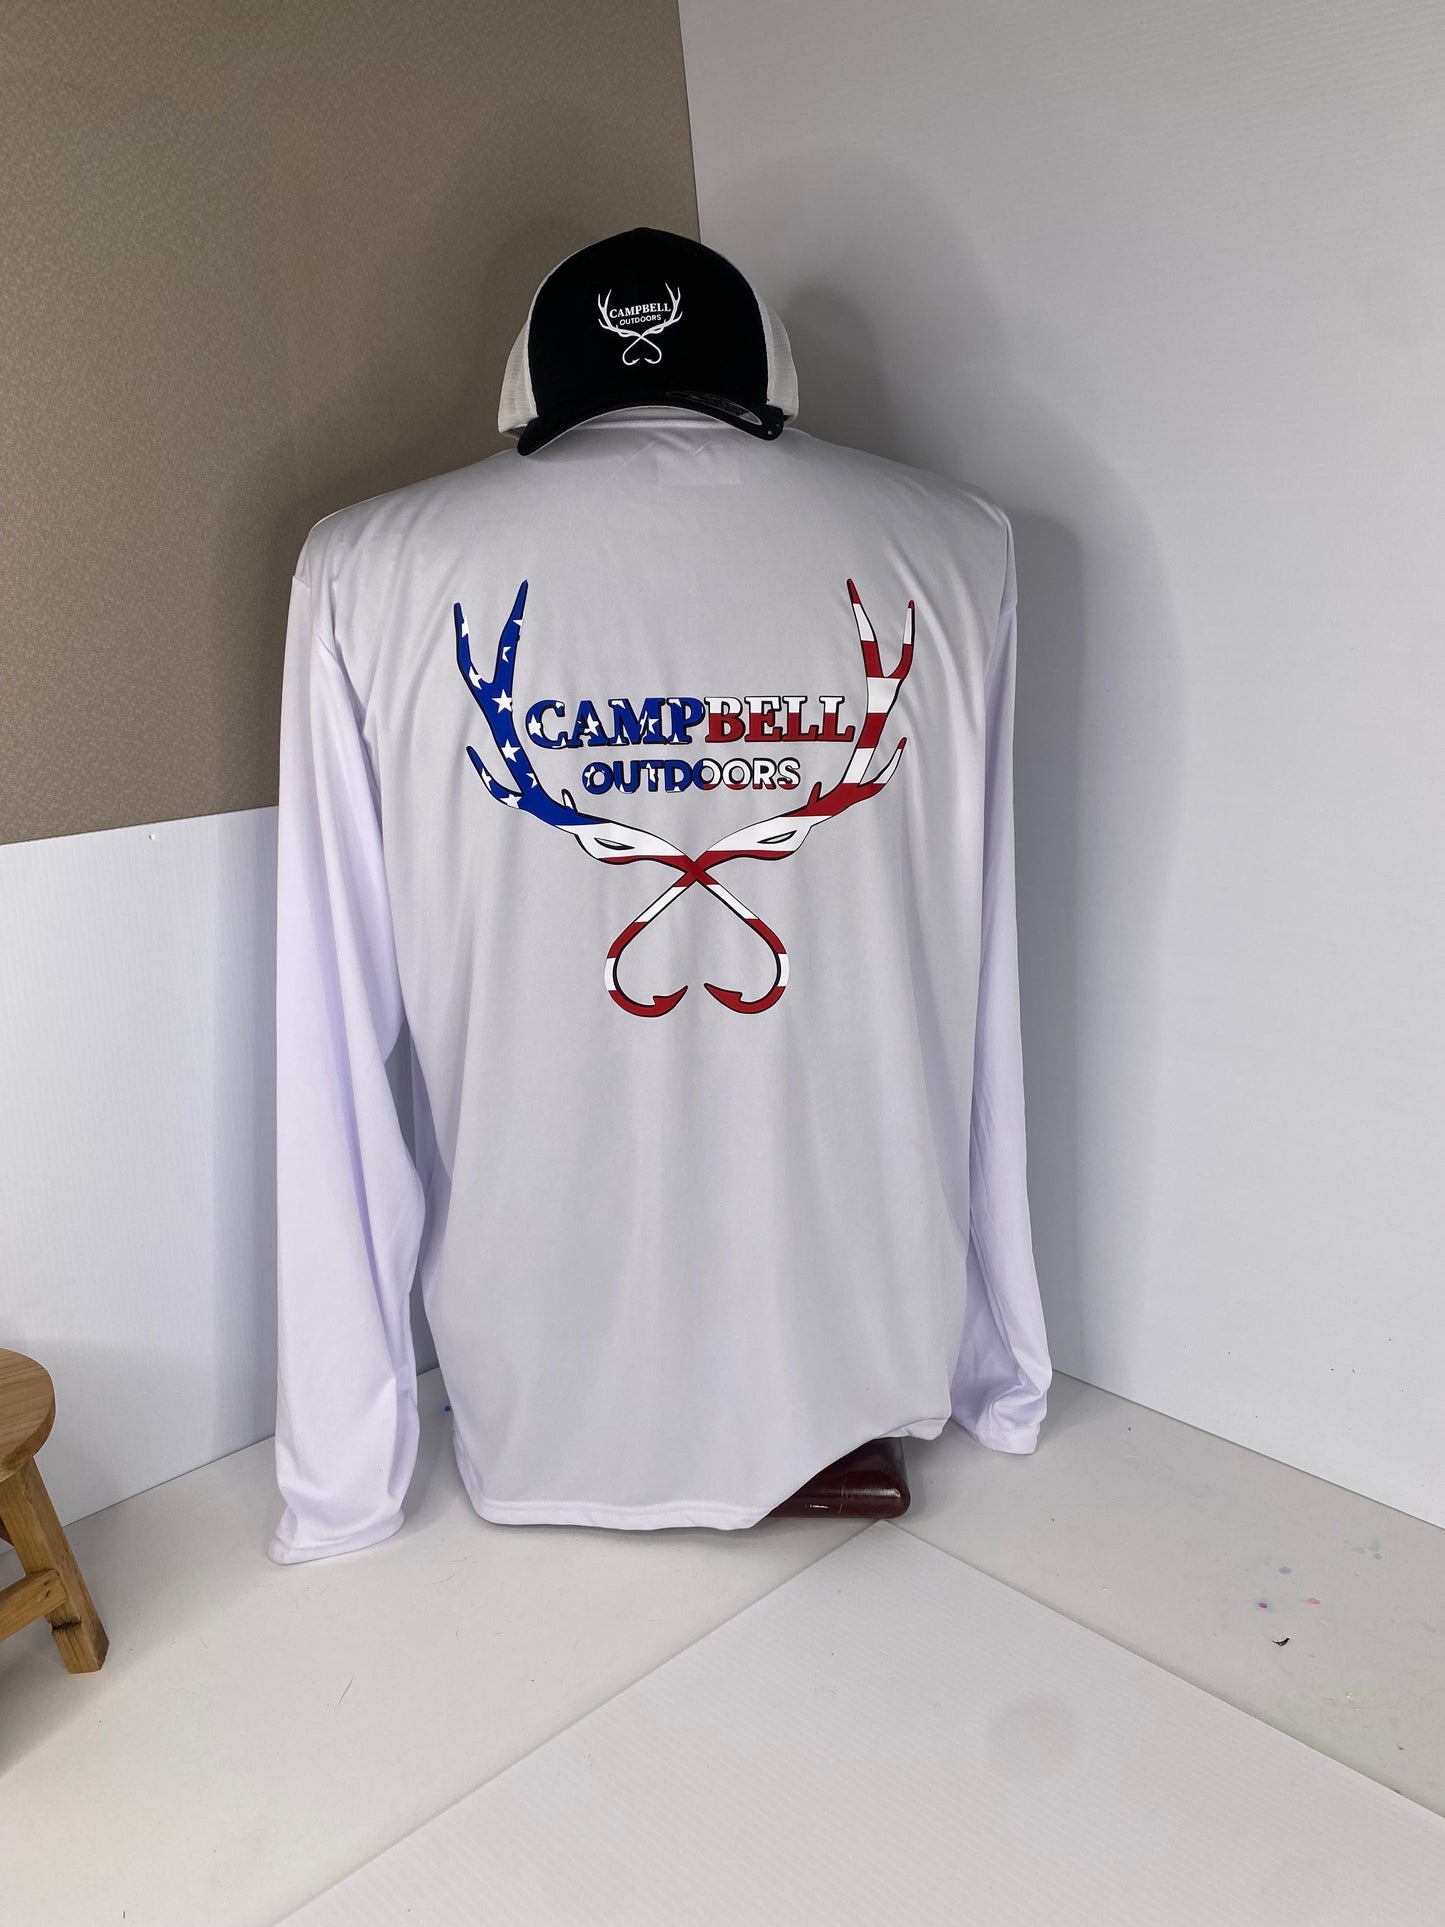 SPF 50 Long Sleeve Fishing Shirt – Campbell Outdoors